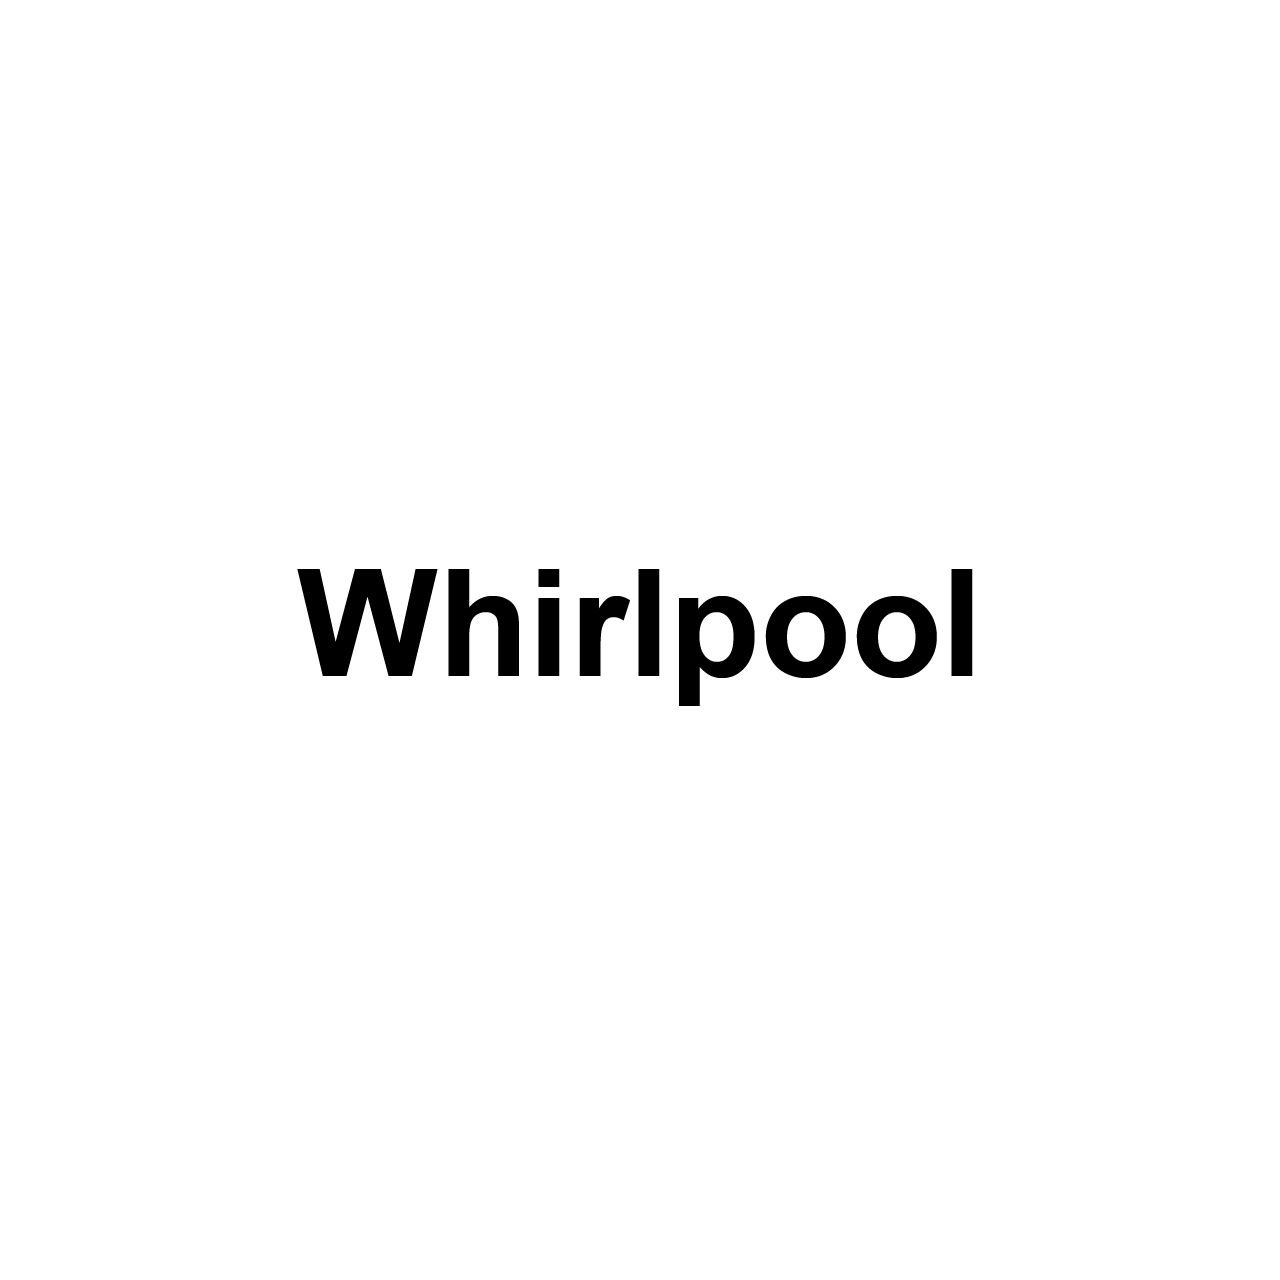 whirlpool-01